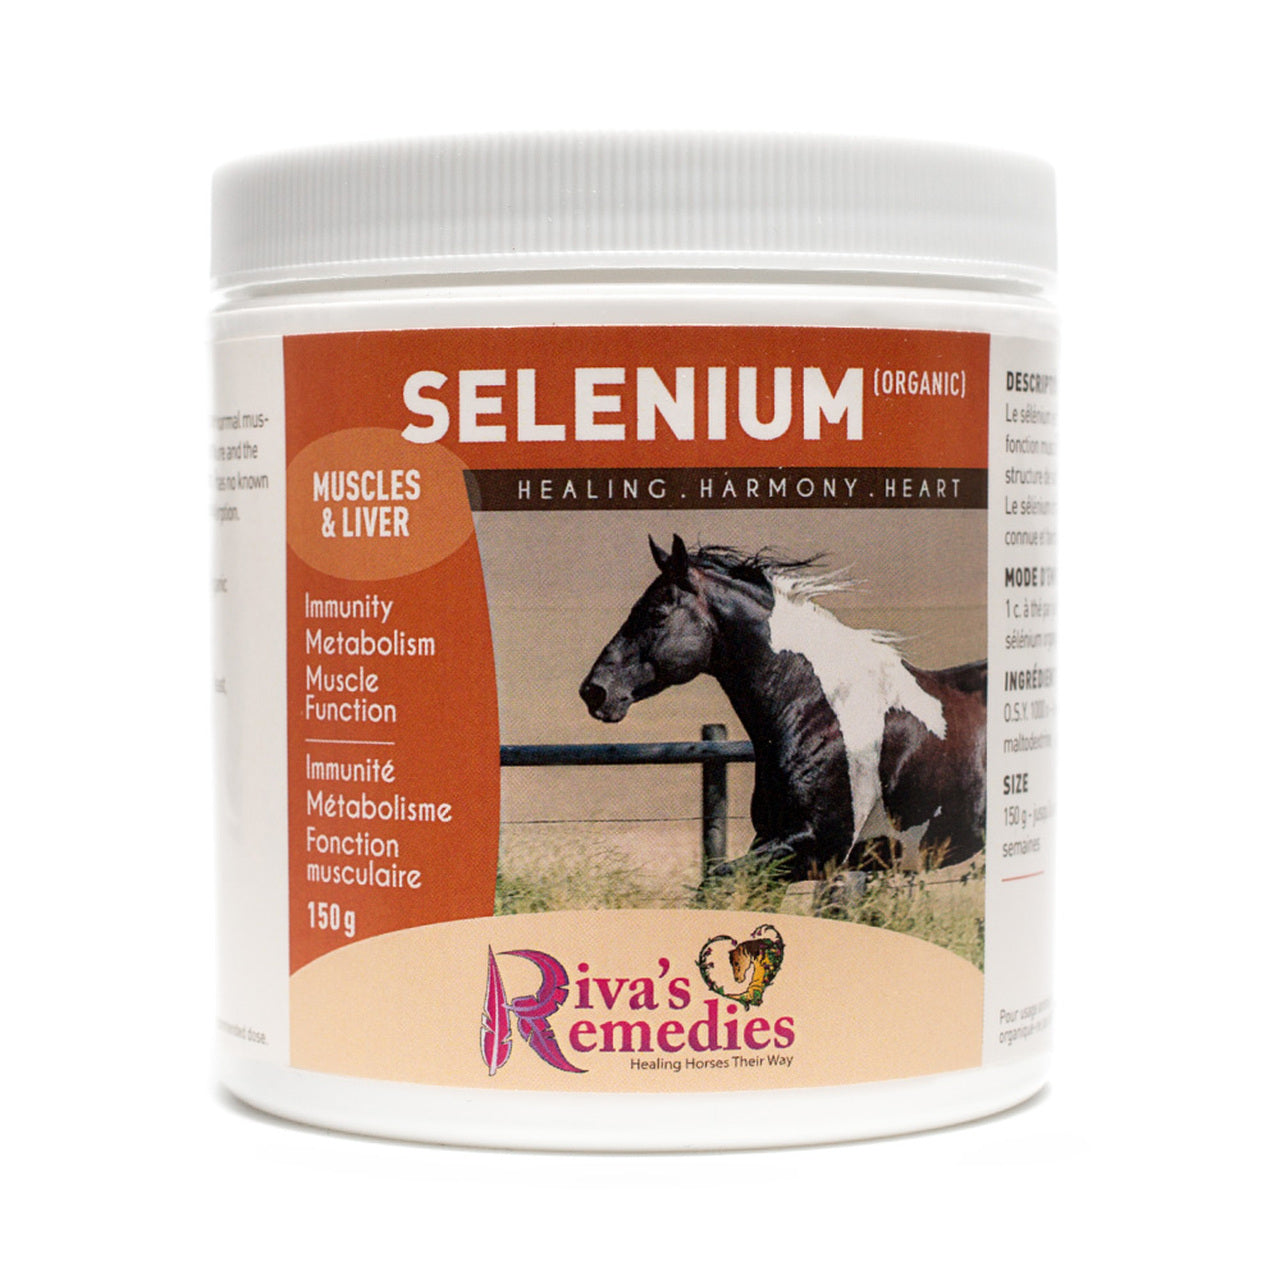 Riva's Remedies Equine Organic Selenium - 500g